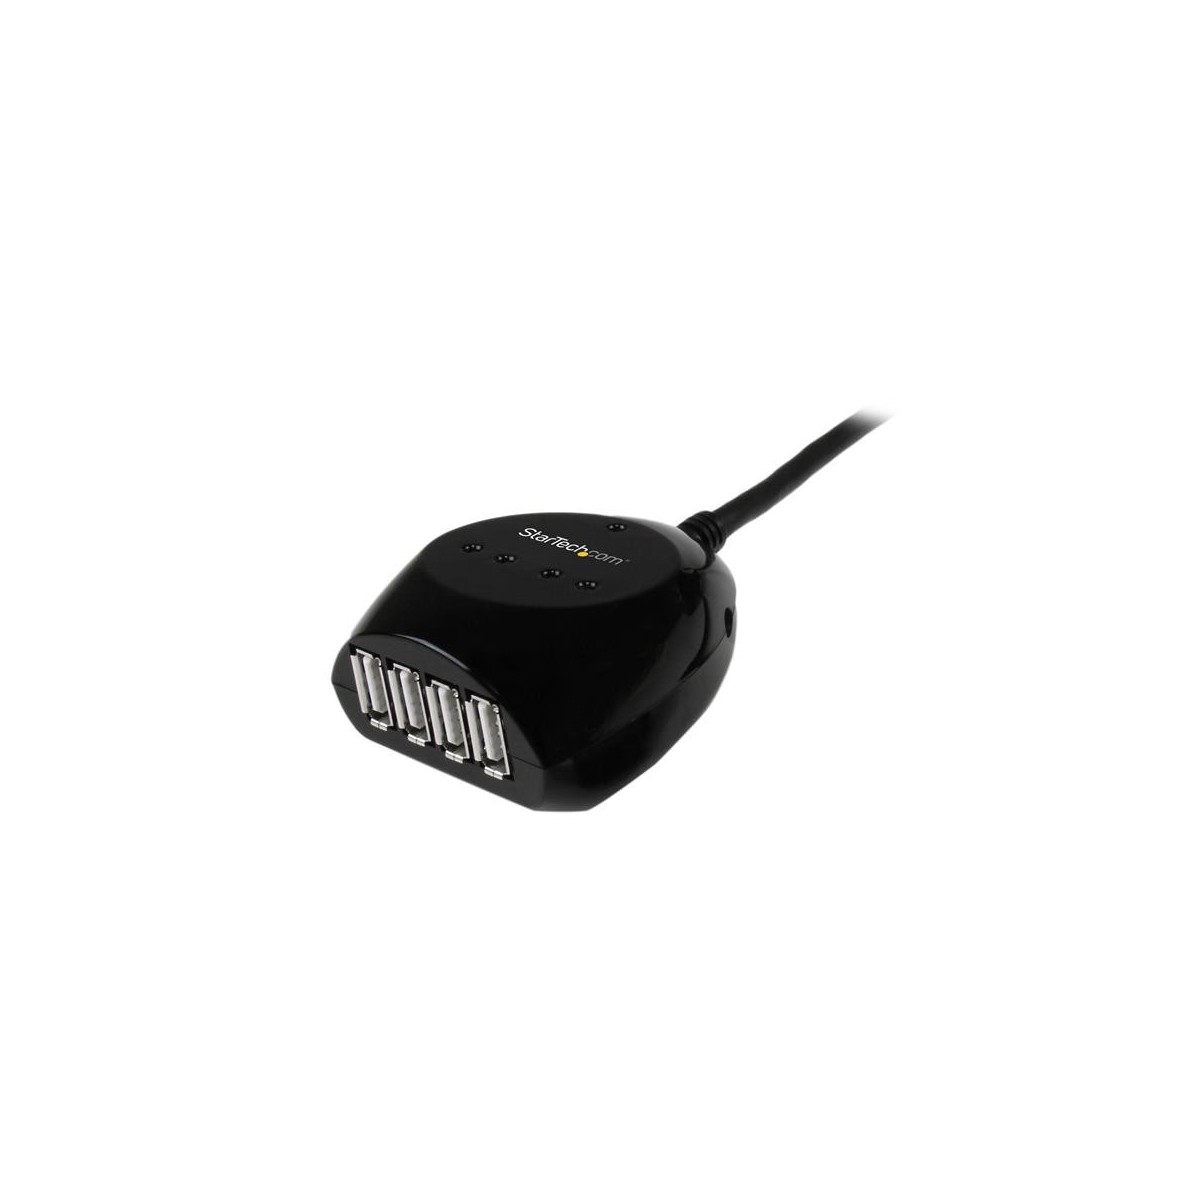 StarTech.com 15m USB 2.0 Active Cable with 4 Port Hub - USB 2.0 - 480 Mbit/s - Black - 15 m - 110 - 240 V - 5 V